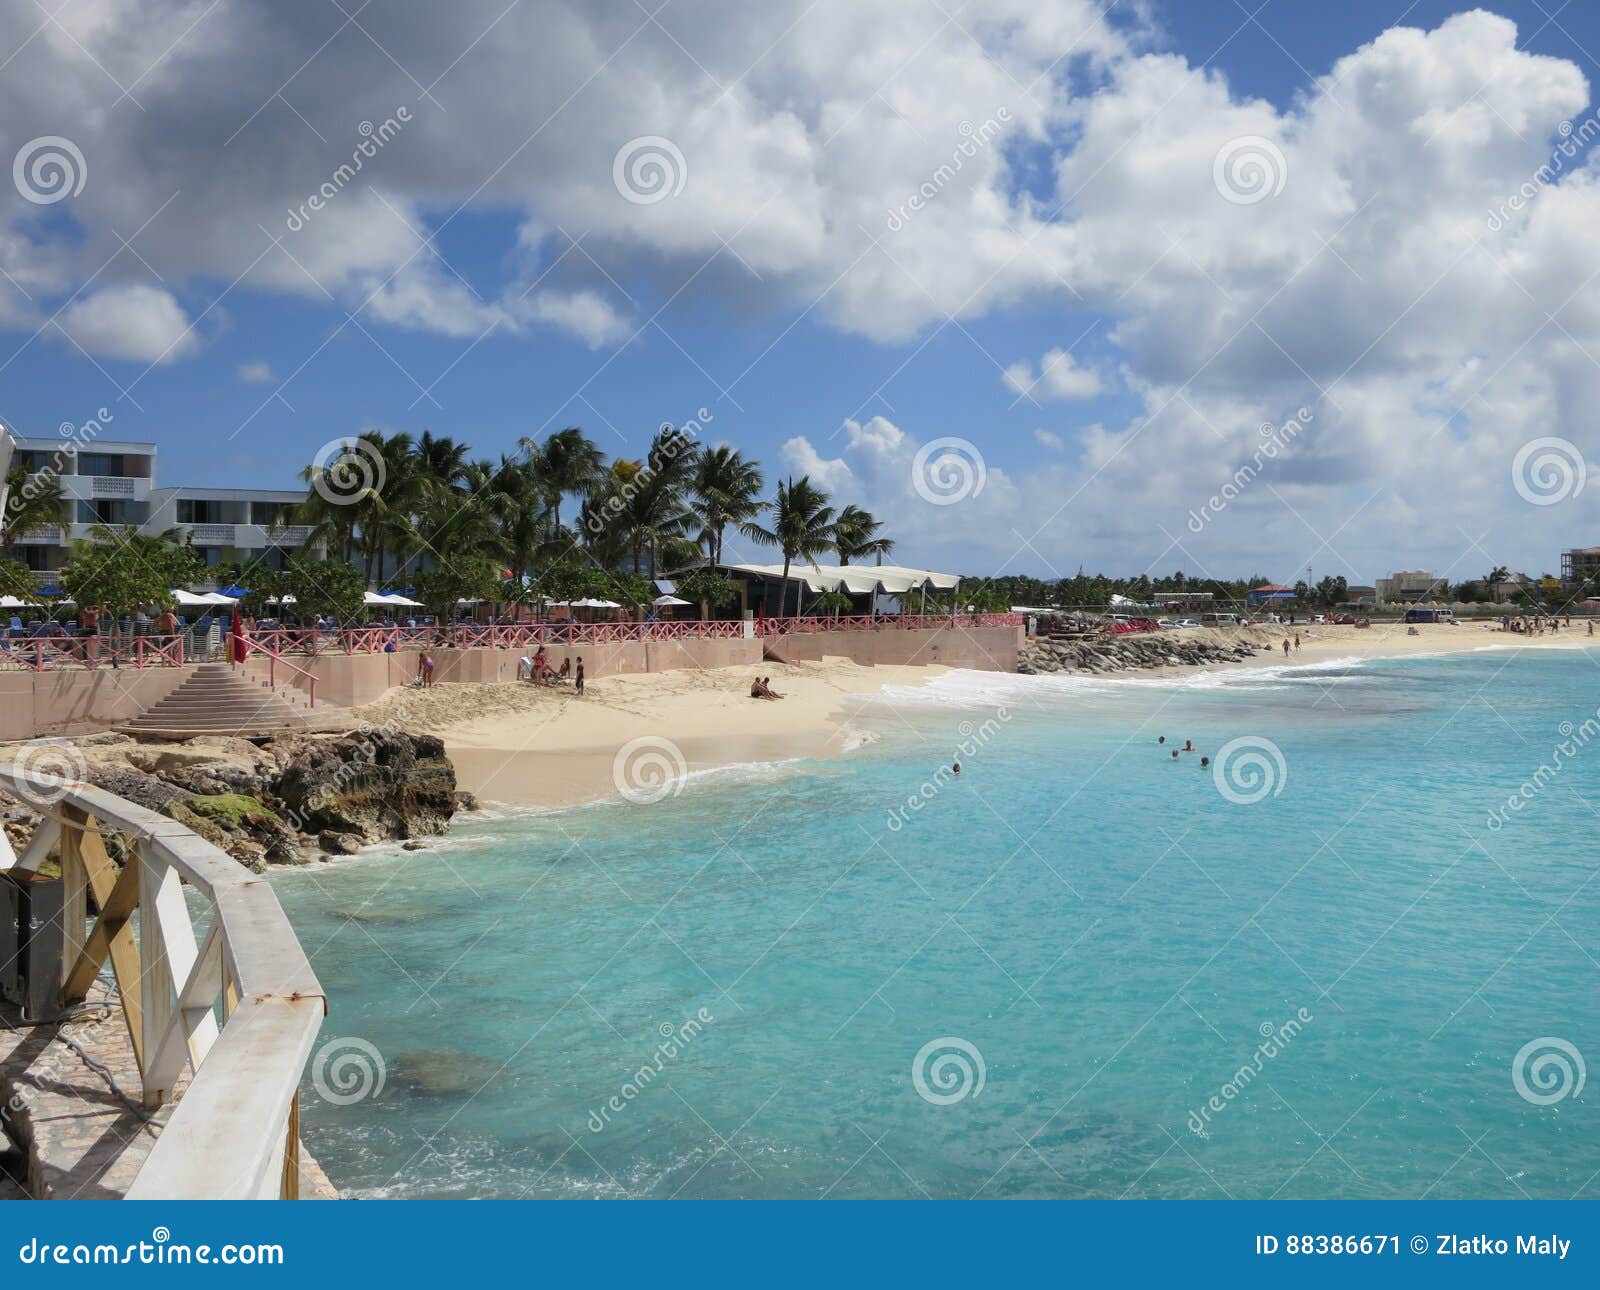 Maho Beach Hotel Sint Maarten Stock Image Image Of Cayman